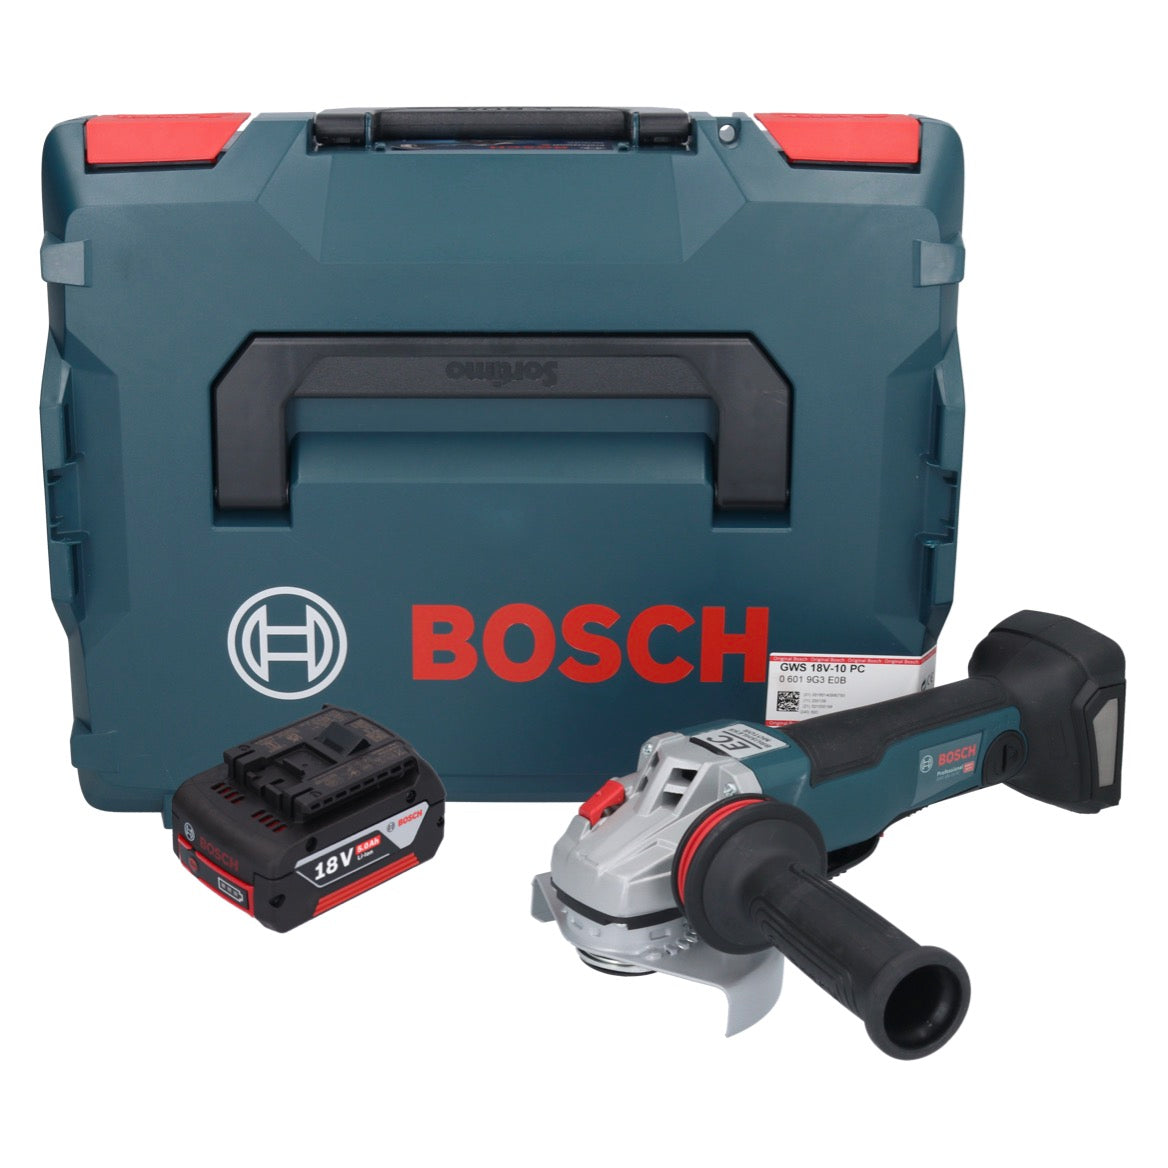 V GWS Bosch Brus 125 Winkelschleifer Akku Toolbrothers 18 PC – mm 18V-10 Professional